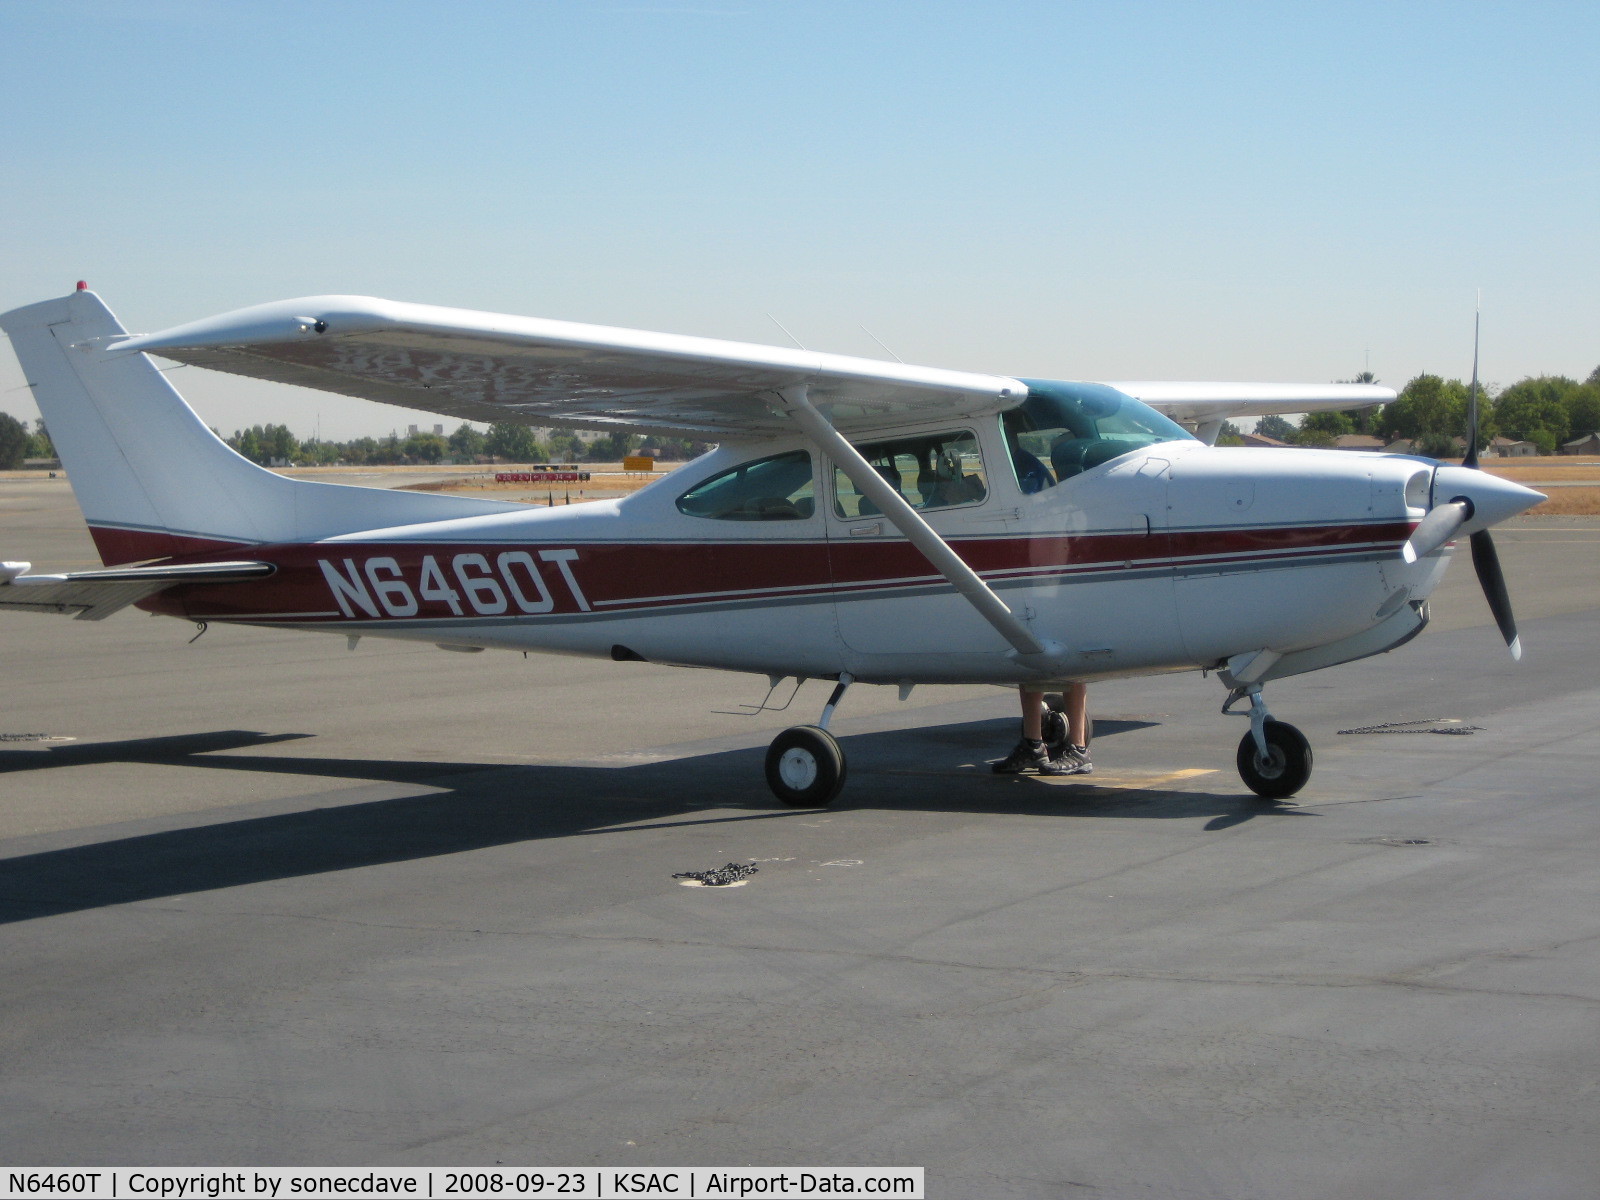 N6460T, 1985 Cessna TR182 Turbo Skylane RG C/N R18202031, Last 1985 TR182, second to last TR182 ever!